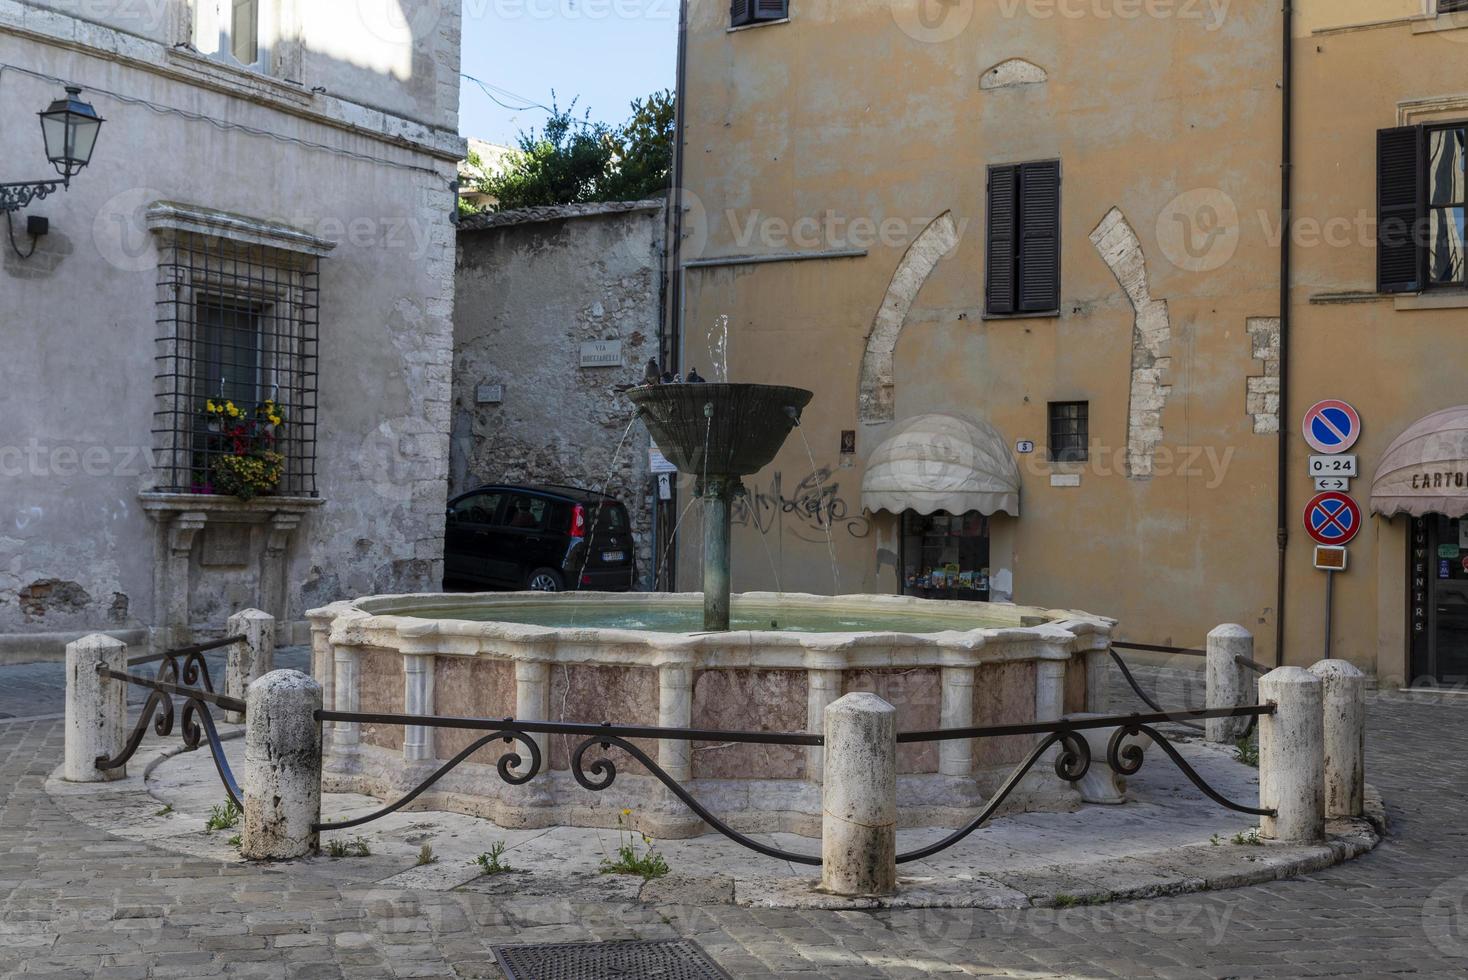 Fountain on the square of Priori in the center of Narni, Italy, 2020 photo